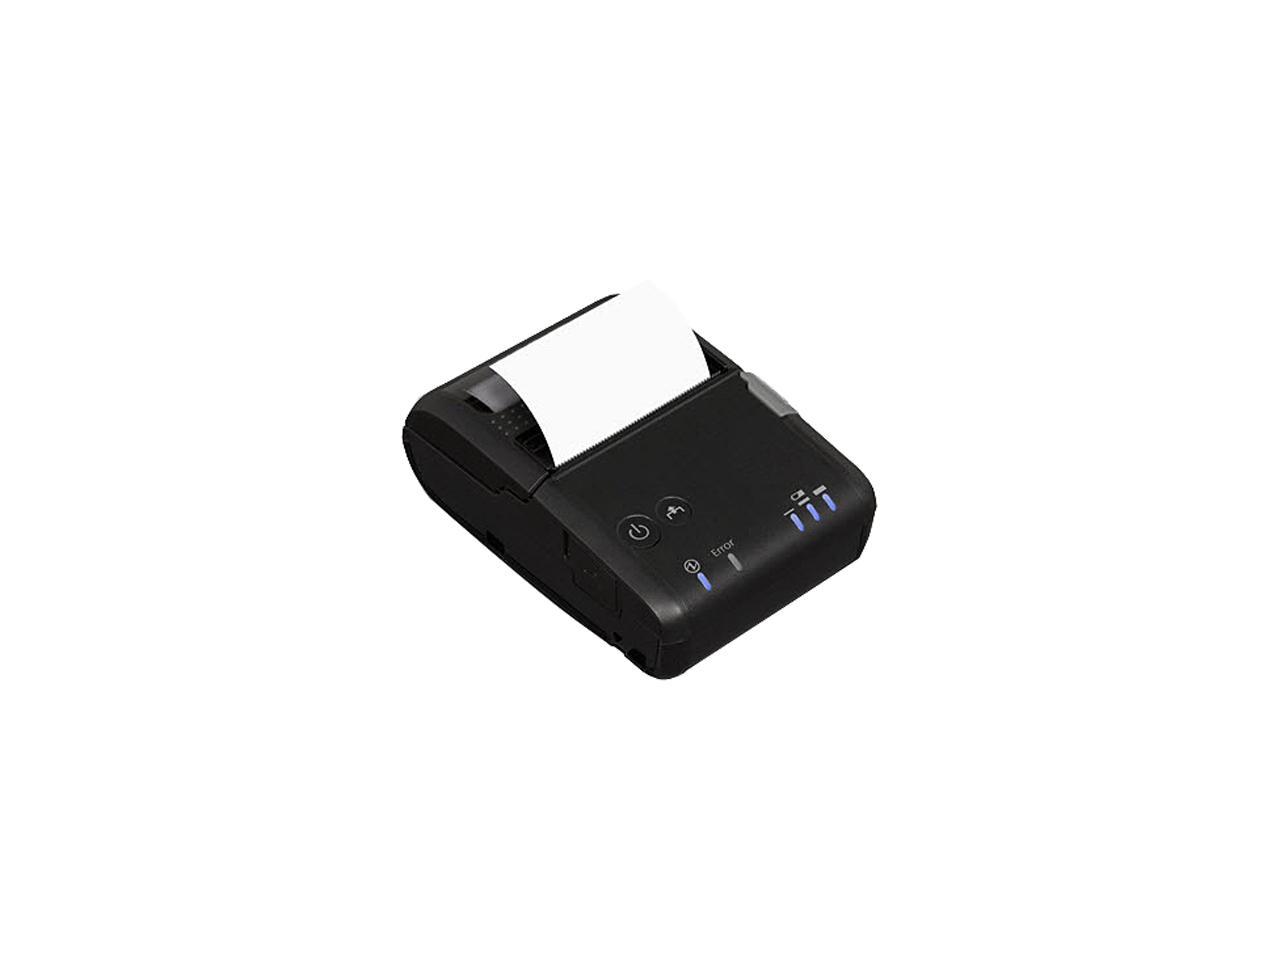 Epson TM-P20 Mobilink 2" Compact Mobile Bluetooth Receipt Printer, Black - C31CE14551